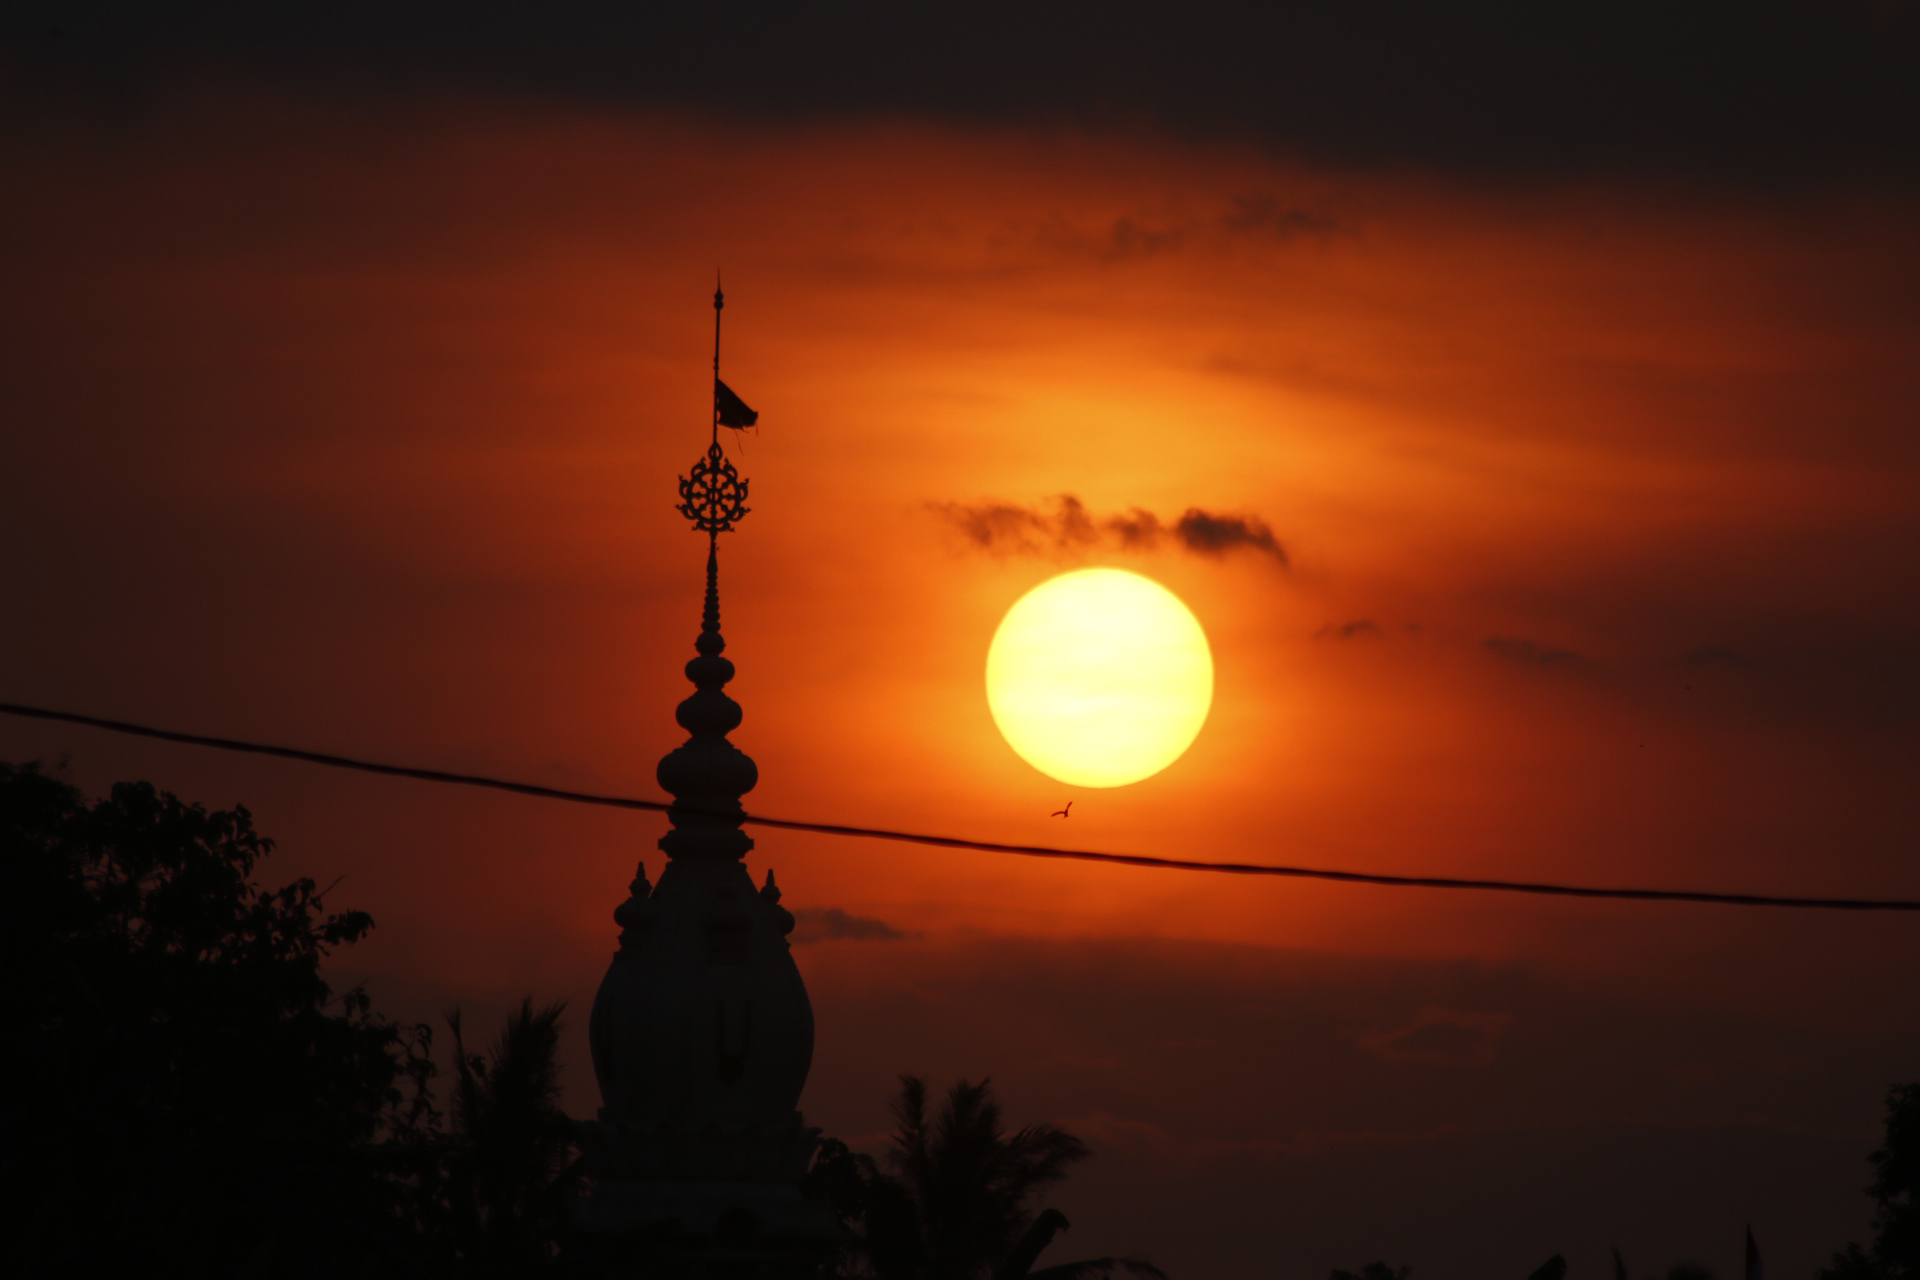 Sunset dengan siluet puncak menara bangunan Sri Sri Radha Giridhari Asram atau asrama tempat belajar Weda di Desa Jatiagung, Jatimulyo, Lampung Selatan, Minggu (21/5). Pemandangan matahari terbenam dengan langit warna menjingga belakangan kerap menghiasi langit di Lampung.